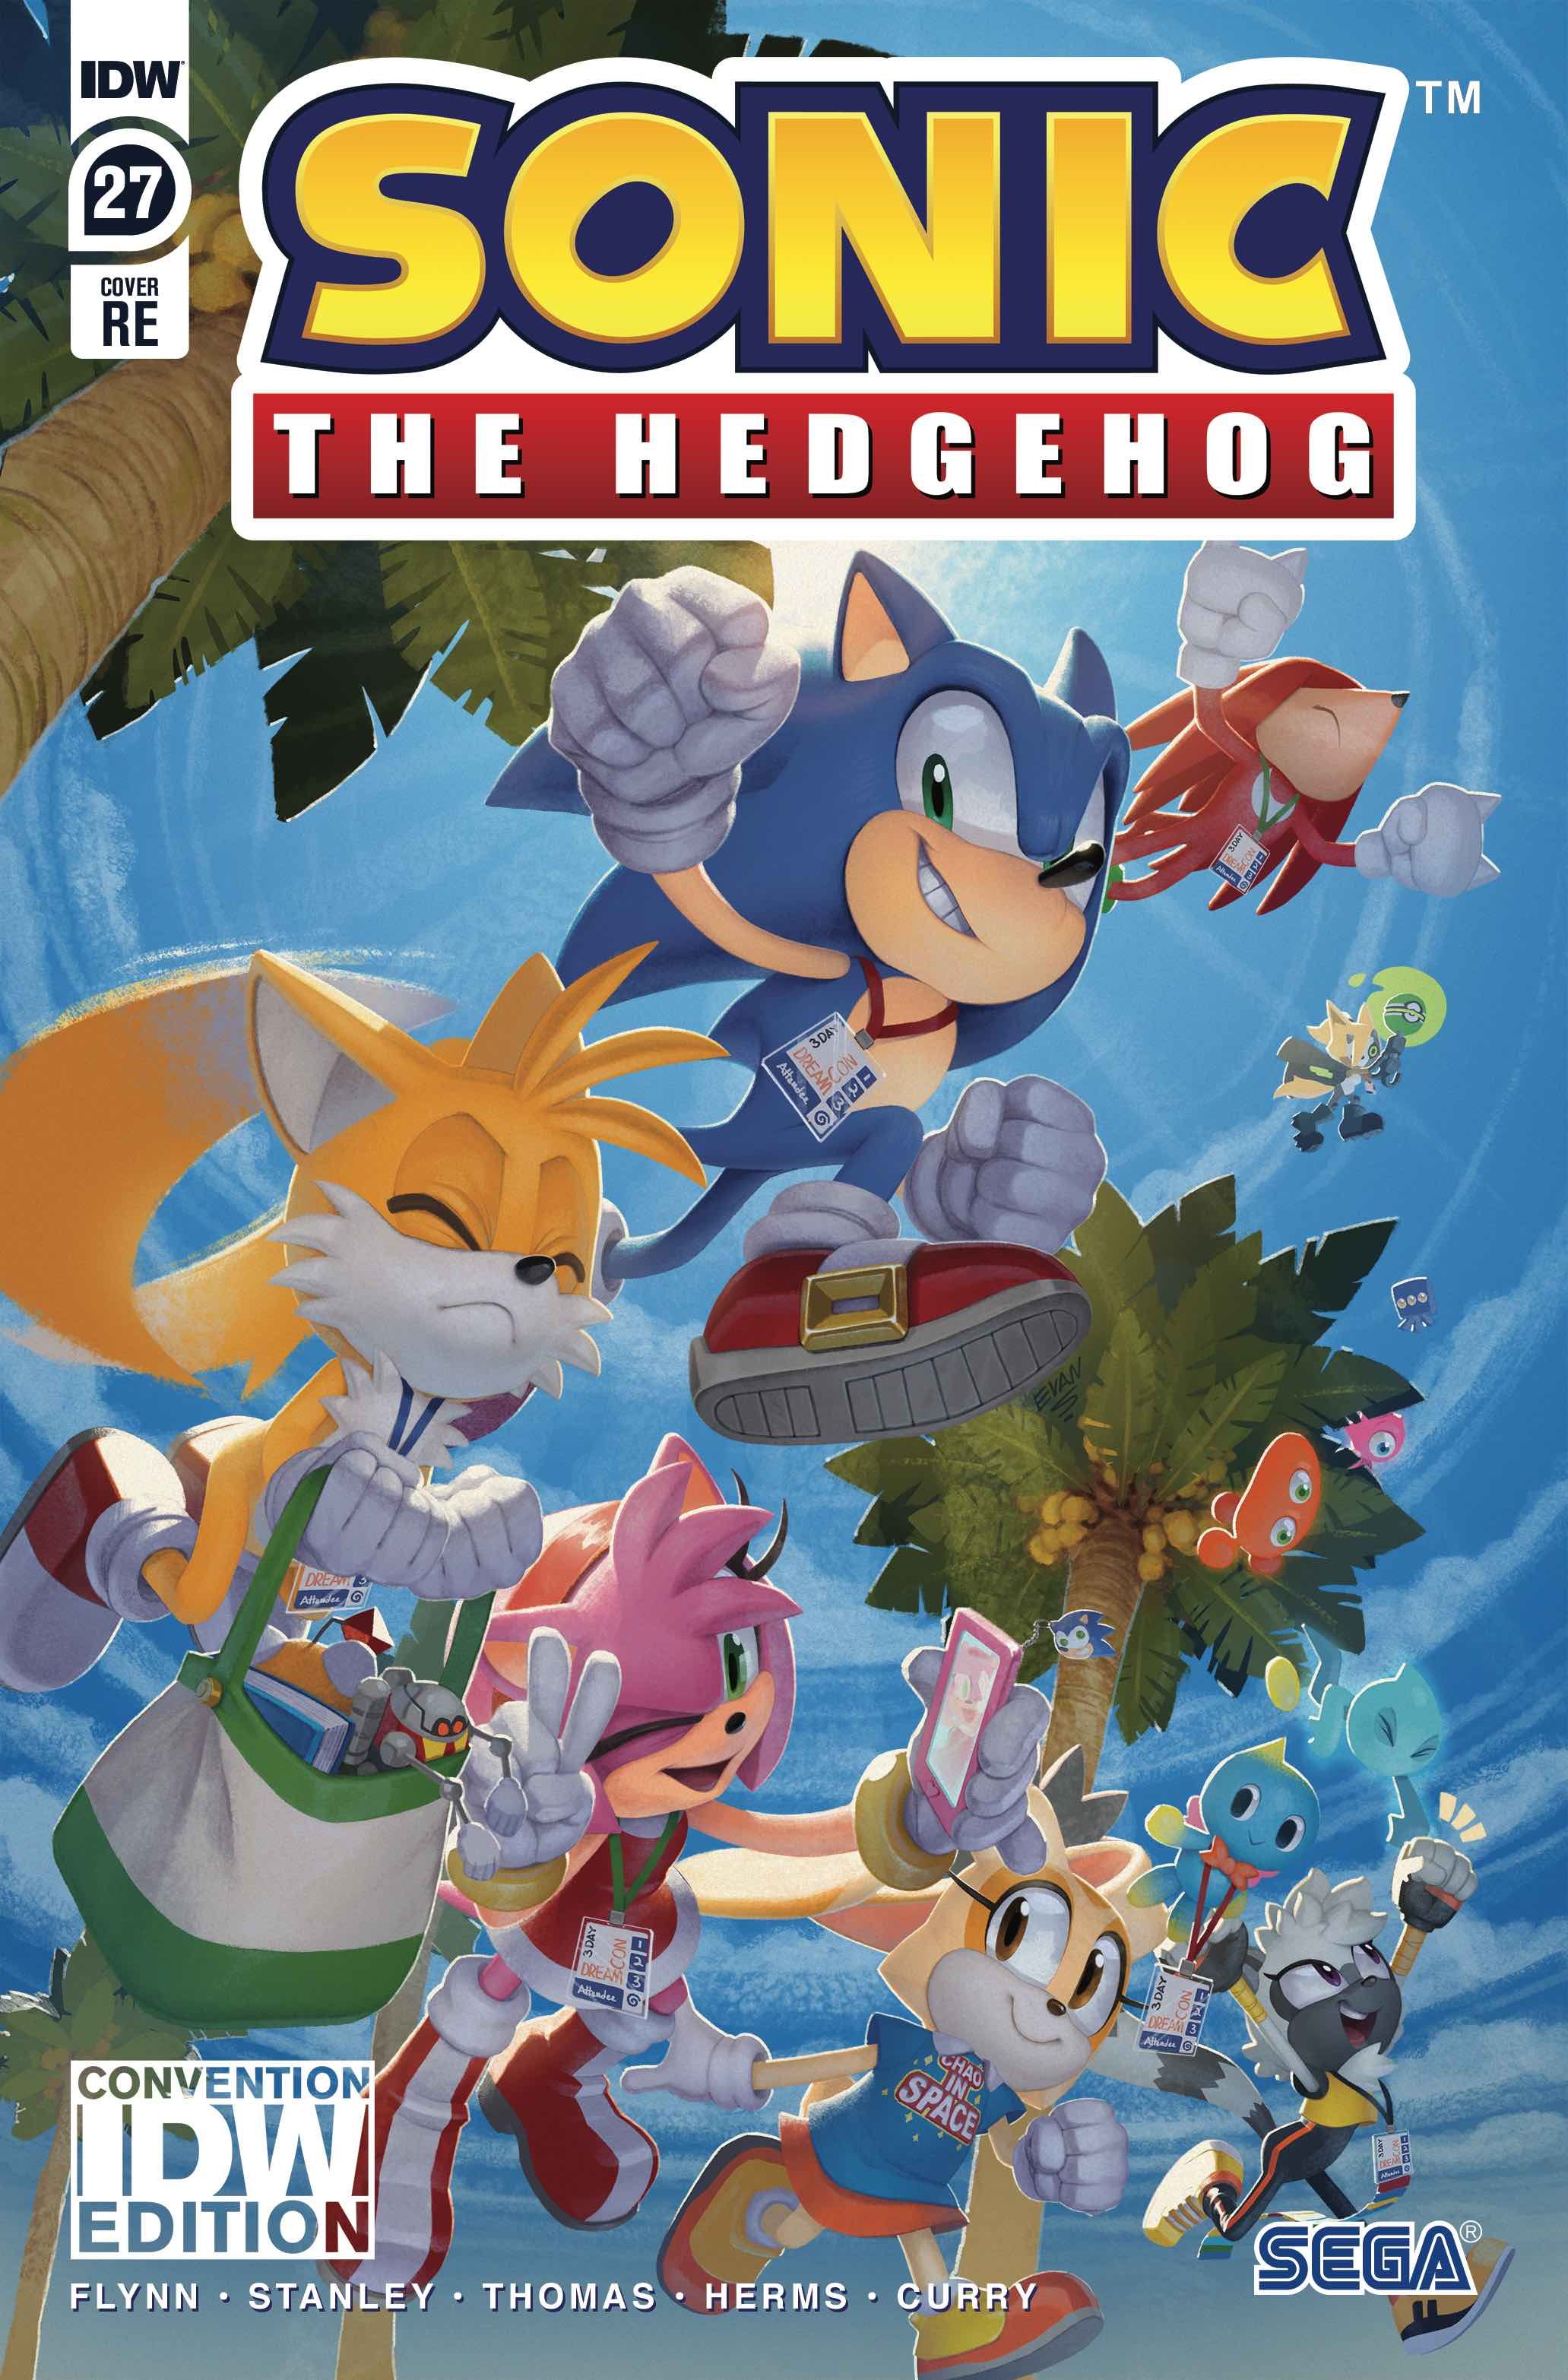 Sonic the Hedgehog (8-bit) (Video Game) - TV Tropes